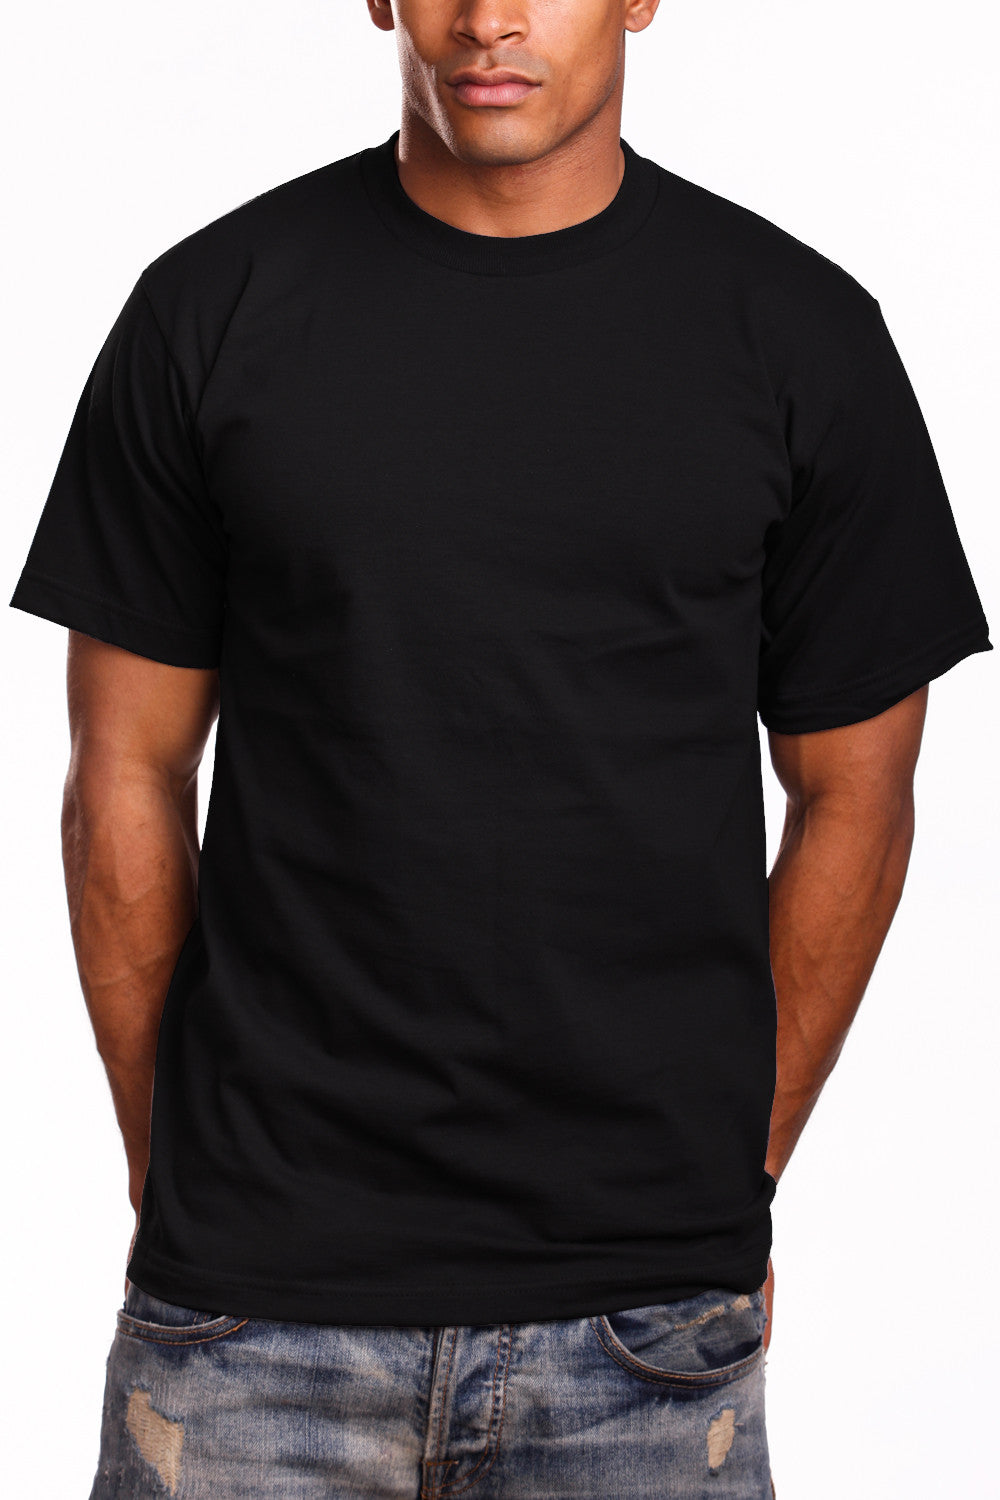 Super Heavy T-shirt: Tall Sizes – 5 USA